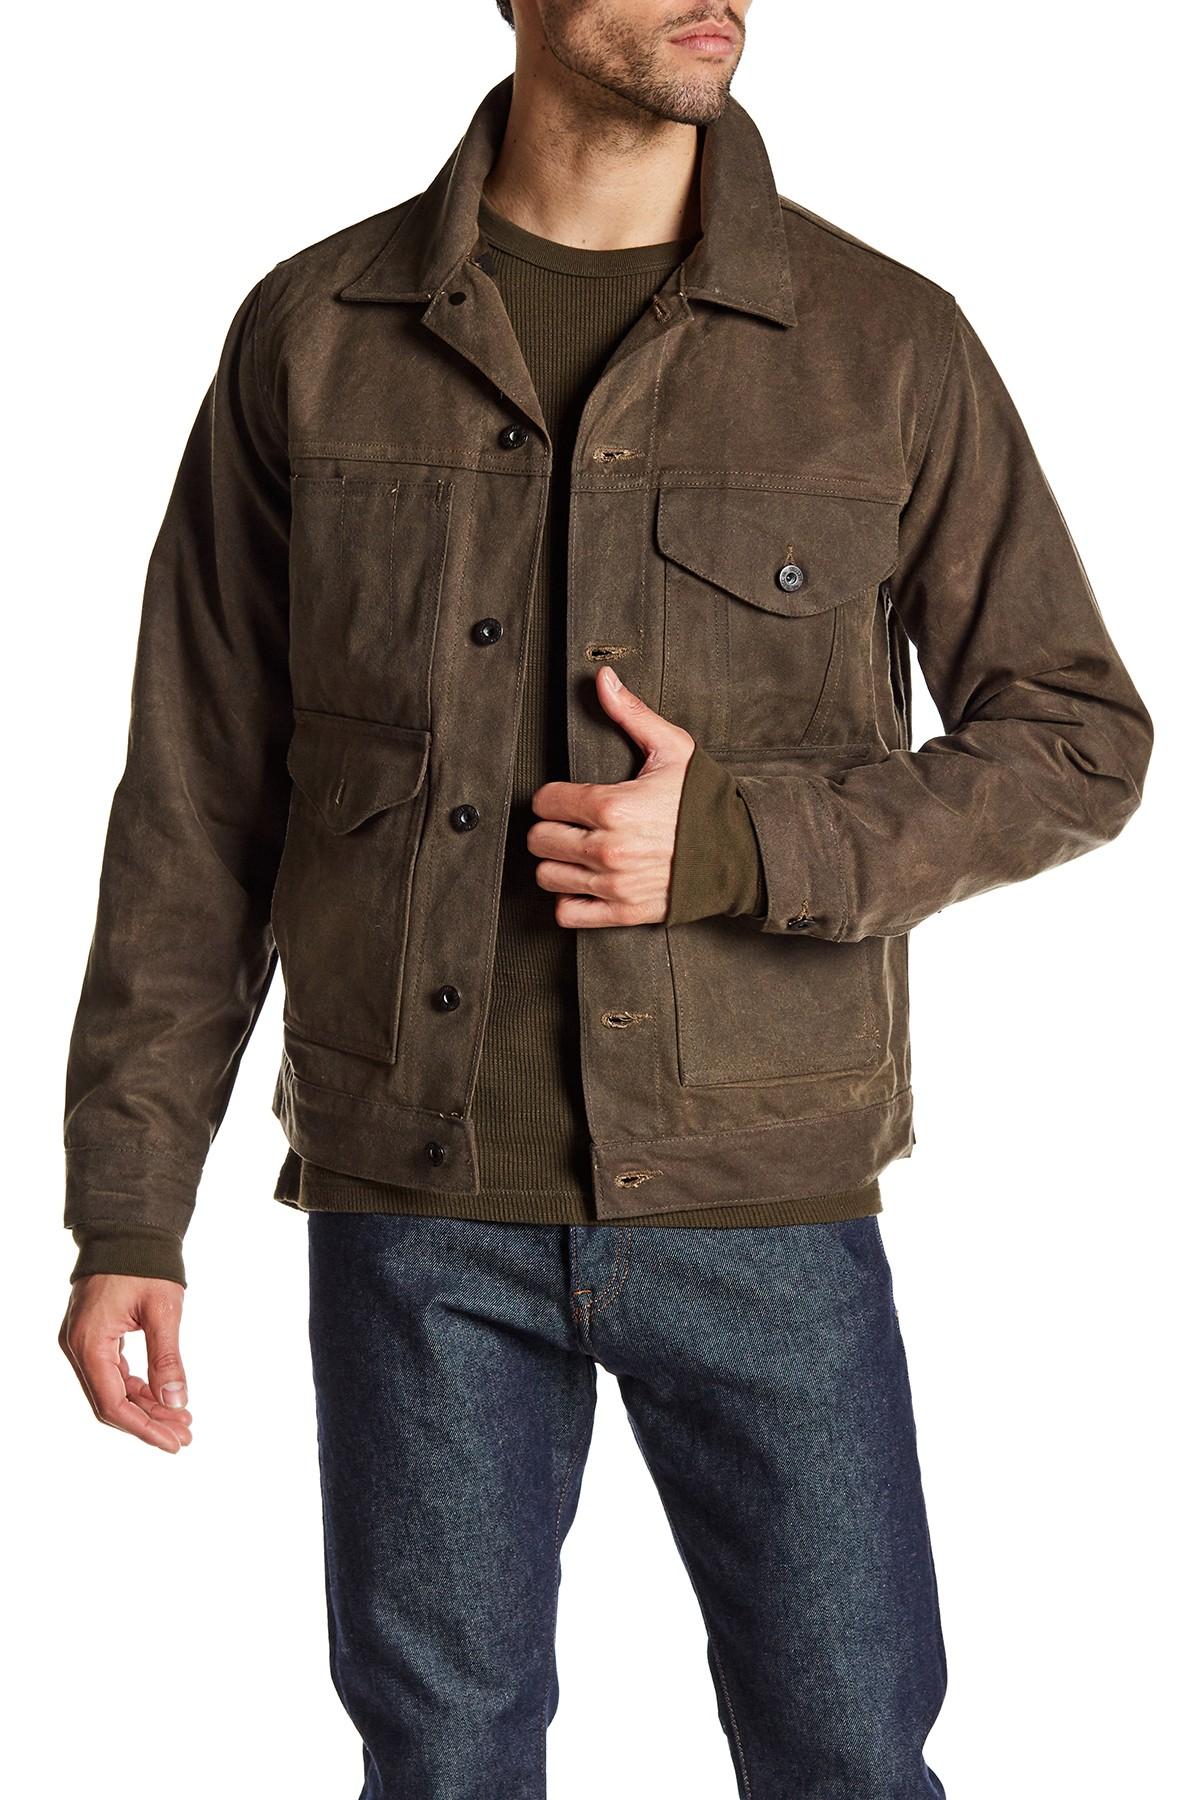 Lyst - Filson Short Cruiser Jacket in Brown for Men